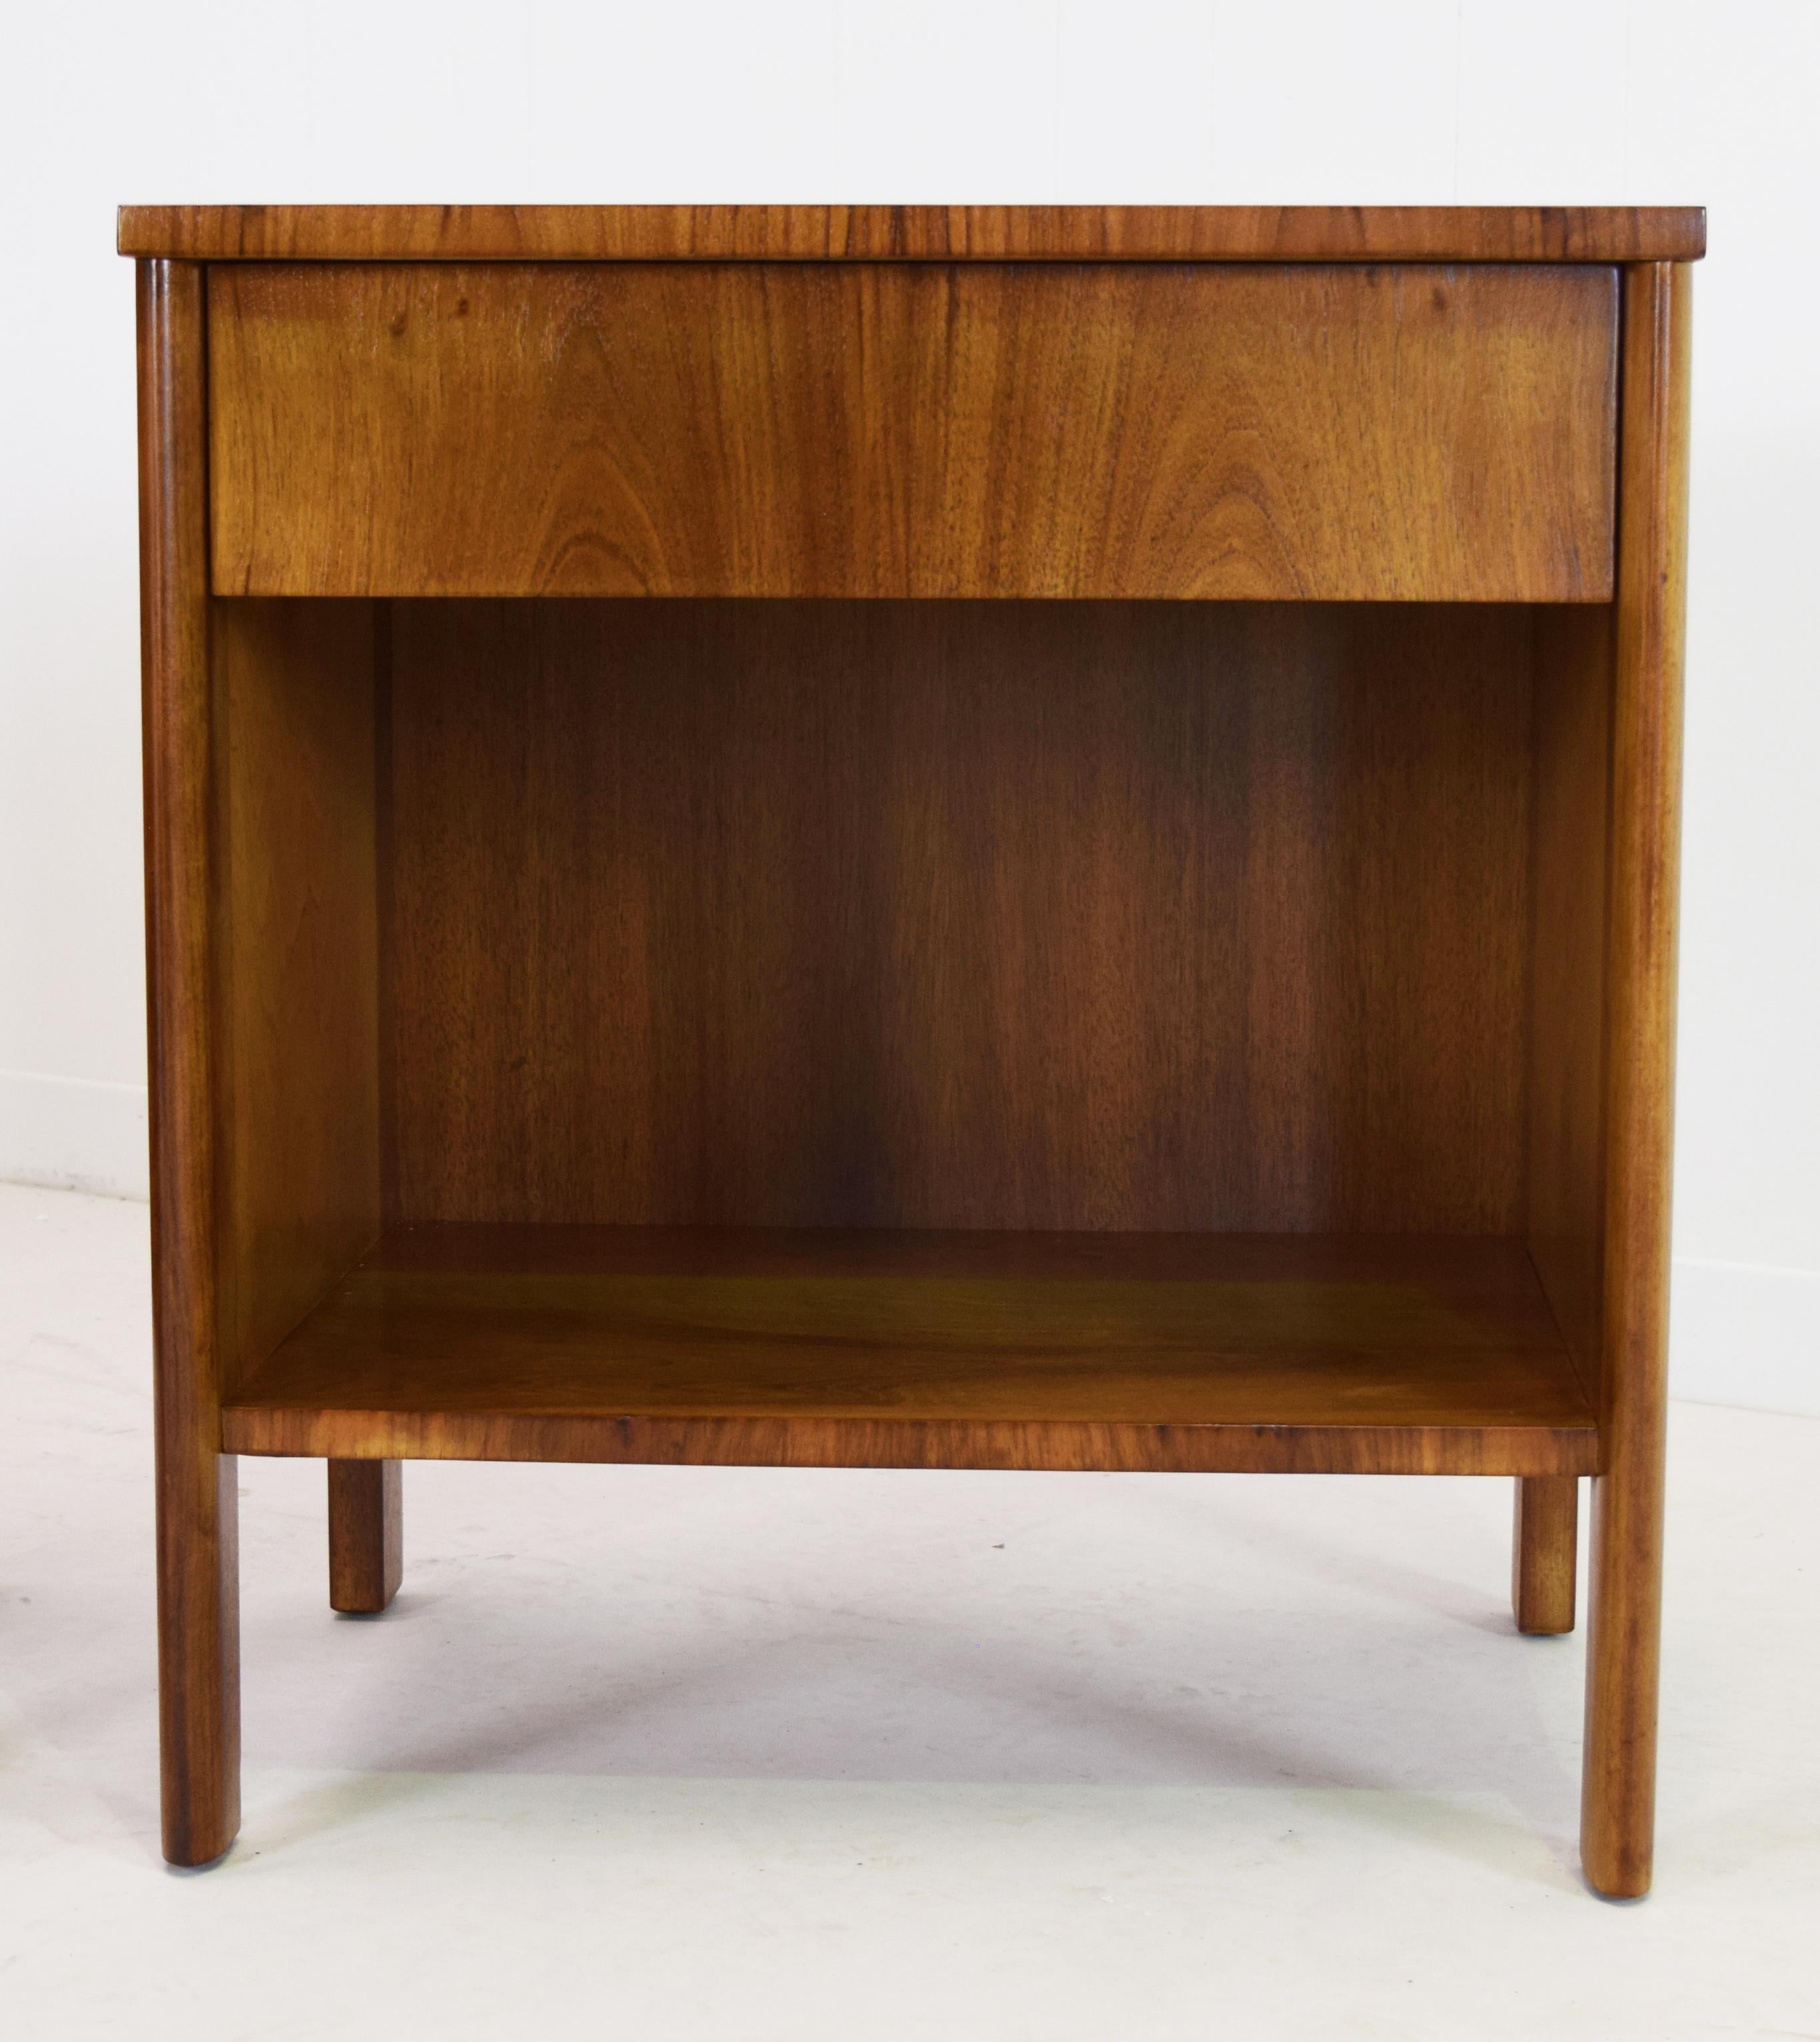 Widdicomb, USA, Designer Dale Ford, 1950, Walnut tables model 548.  Measures 16